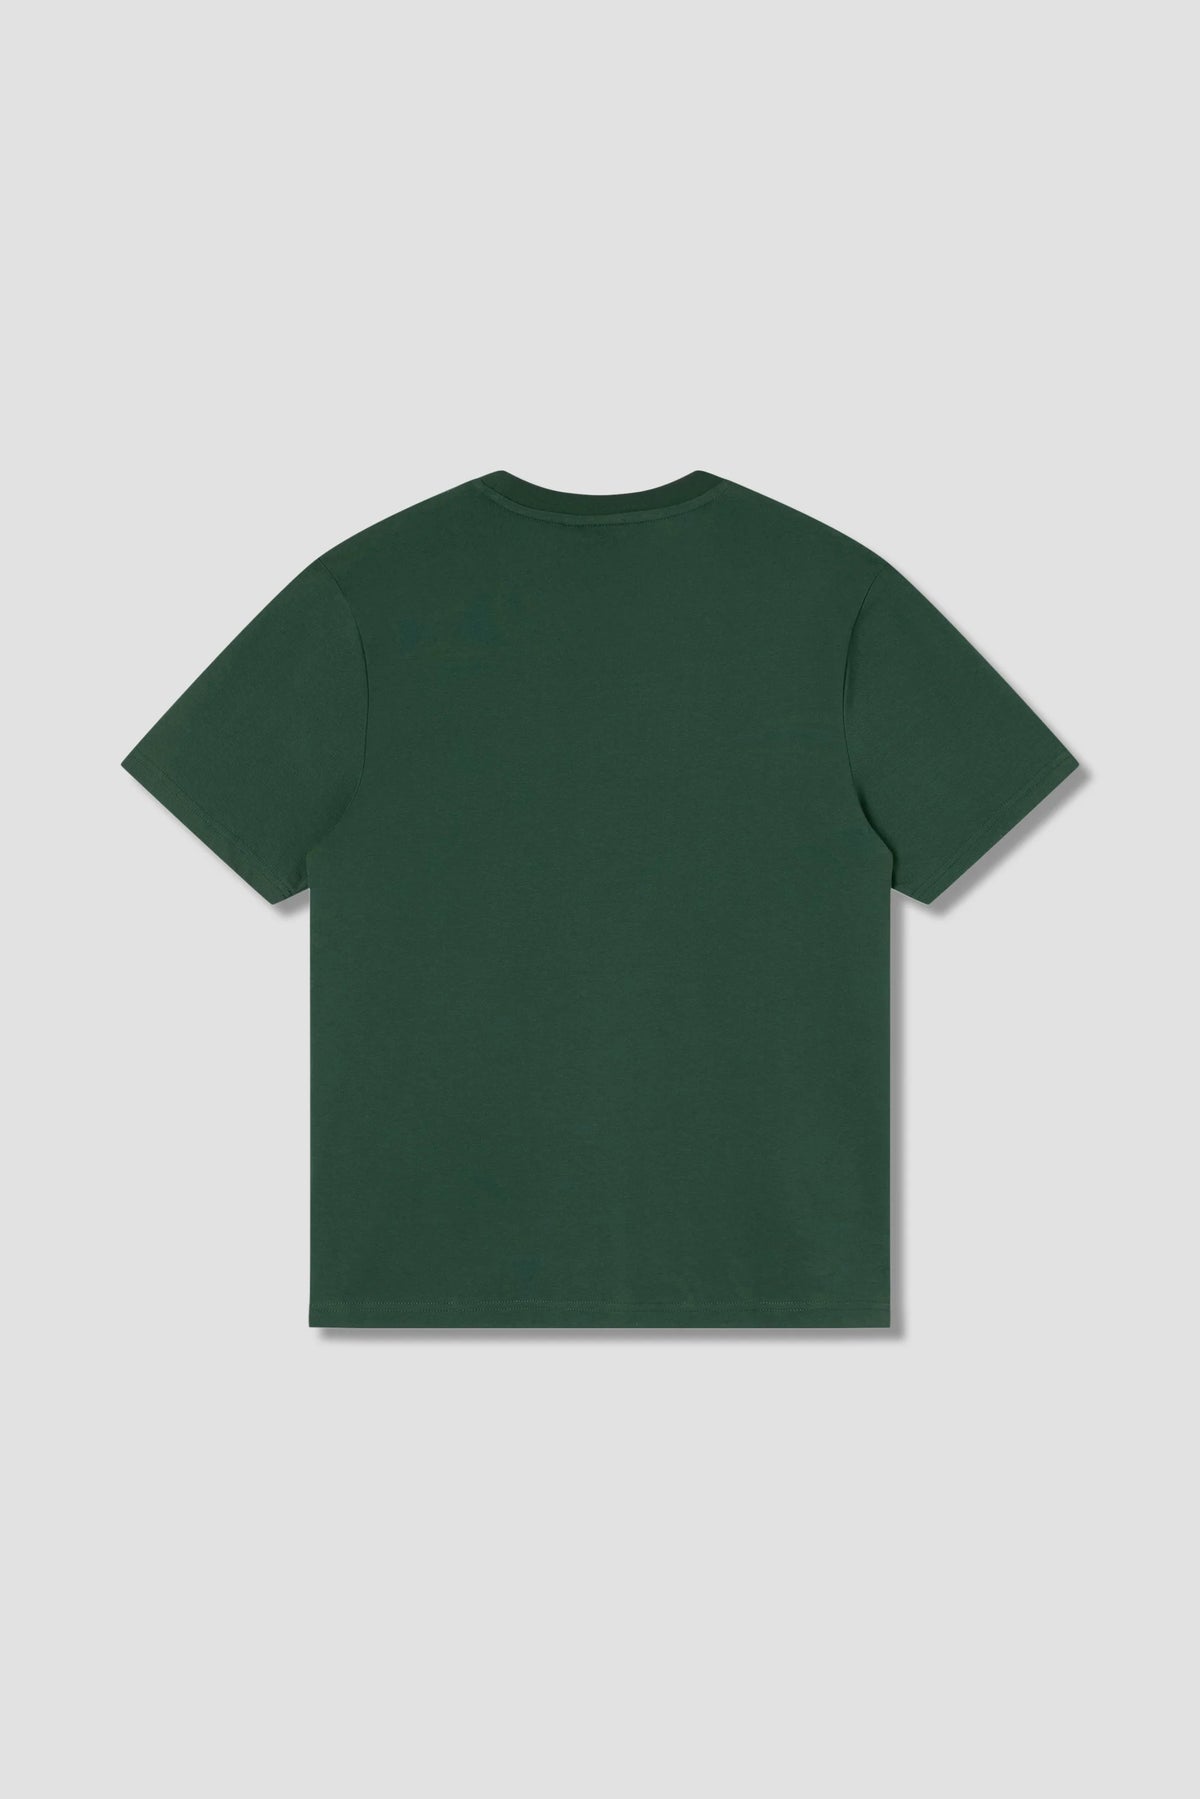 STAN RAY Paint Department T-Shirt - Racing Green